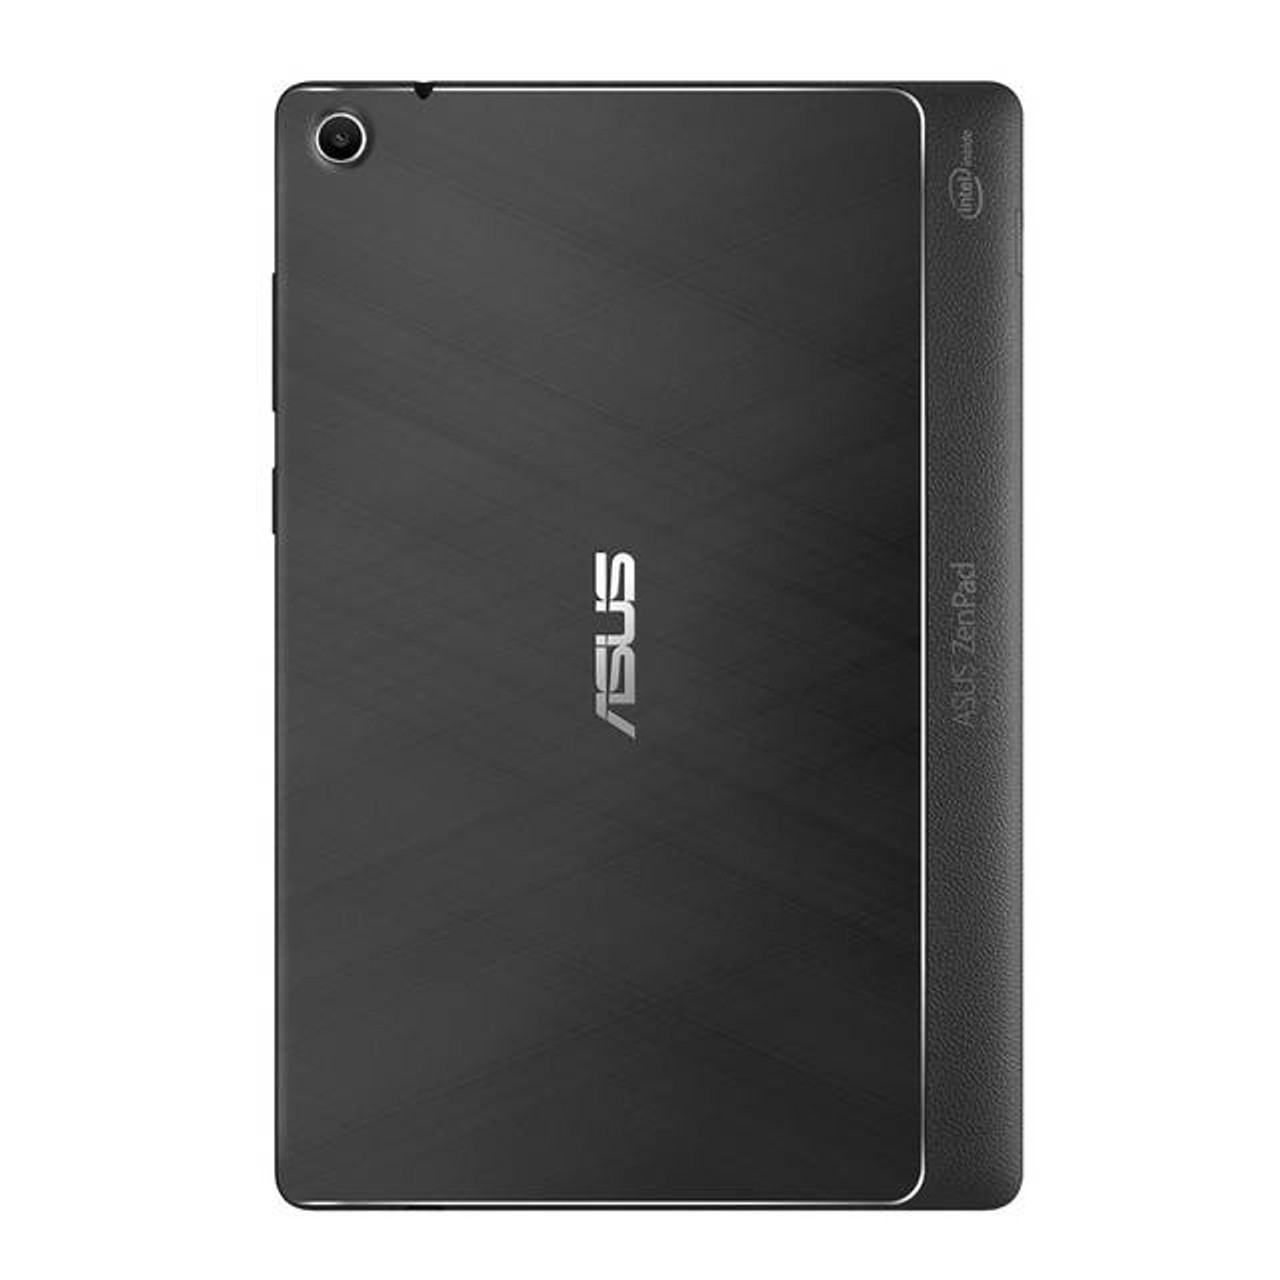 ASUS ZenPad S 8.0 Z580C-B1-BK 8.0 inch Intel Atom Z3530 1.33GHz/ 2GB LPDDR3 / 32GB eMMC/ Android 5.0 Lollipop Tablet (Black)